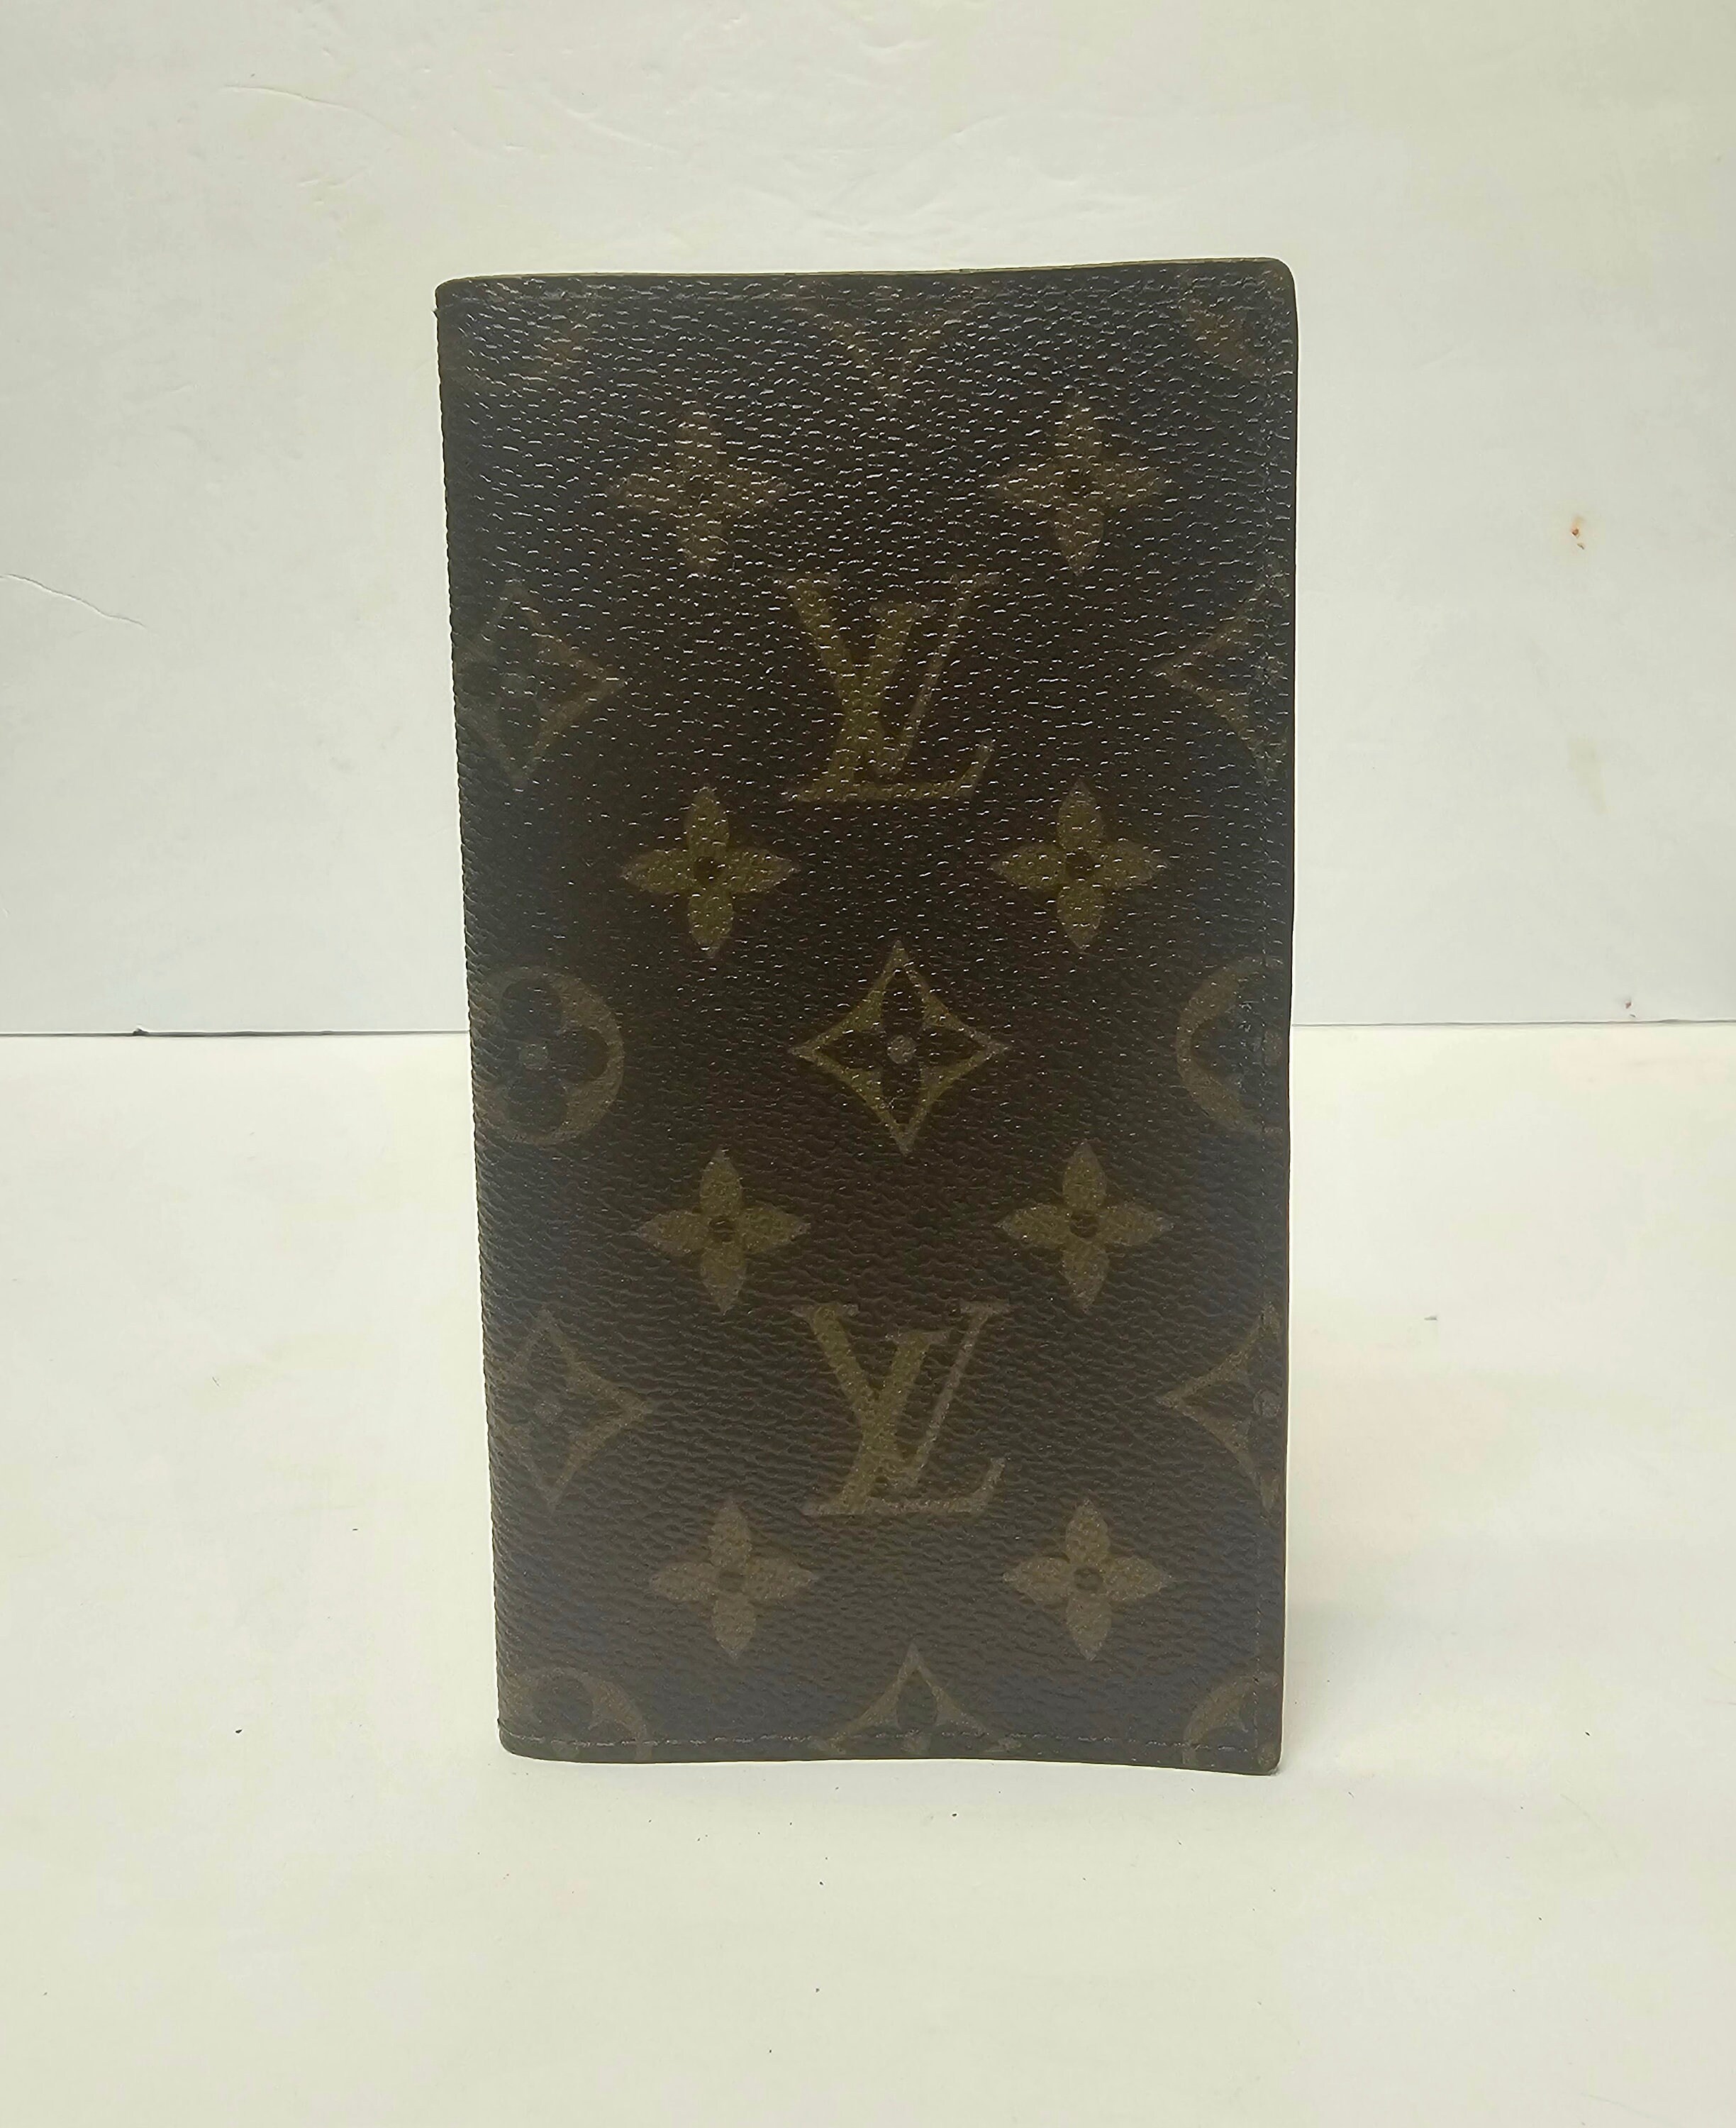 Vintage Louis Vuitton Monogram Checkbook Holder Cover Agenda Poche